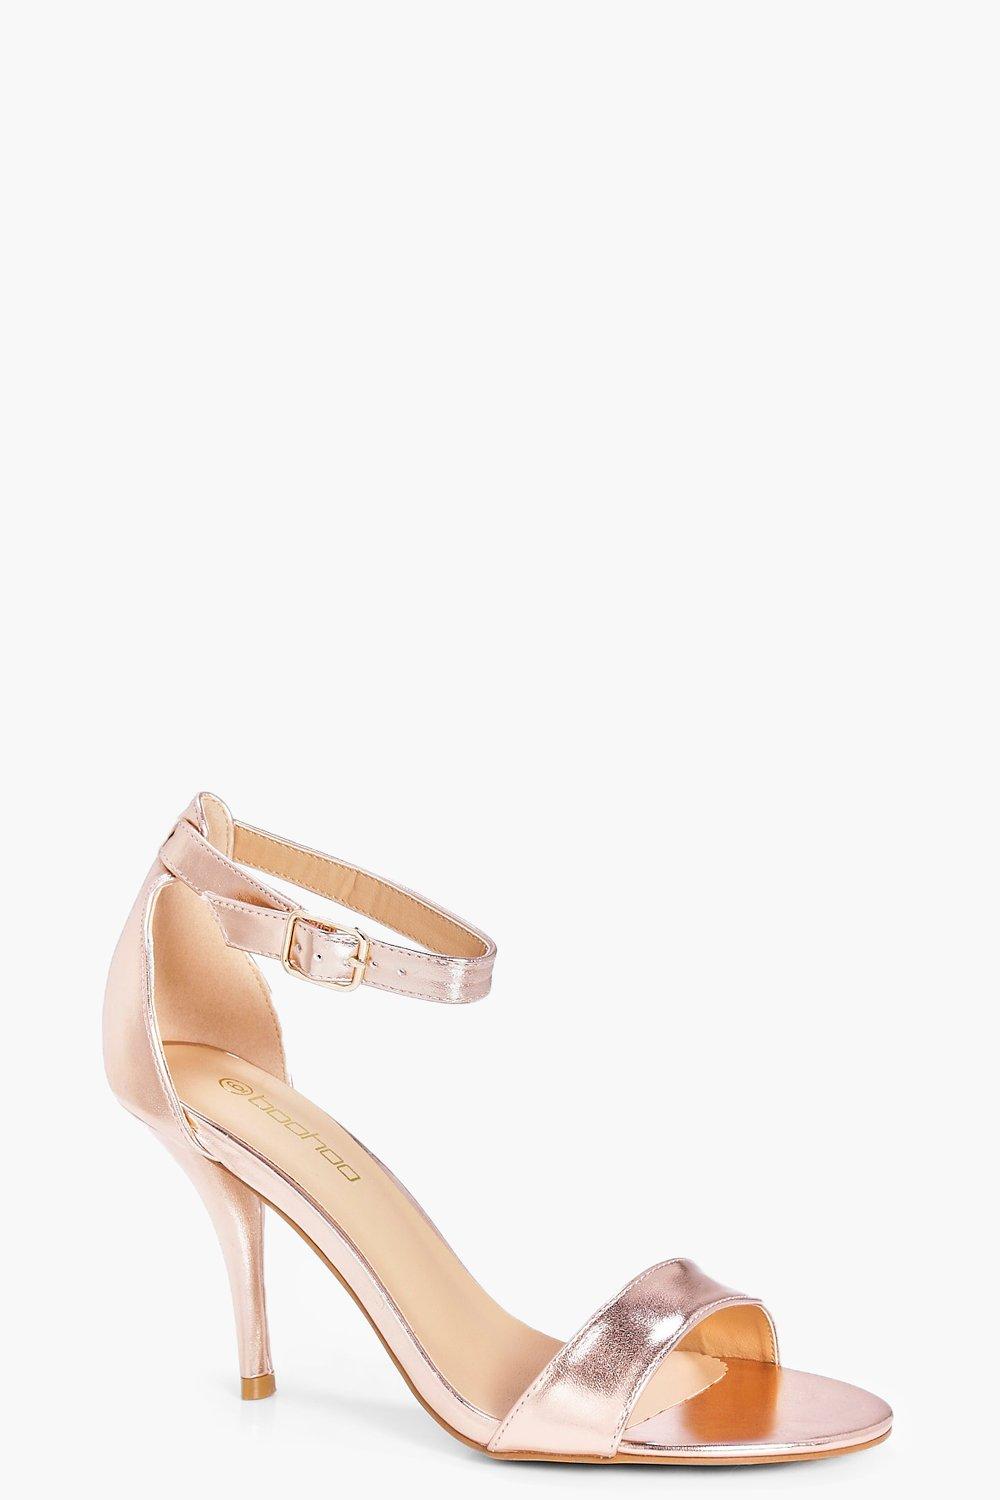 rose gold mid heel sandals